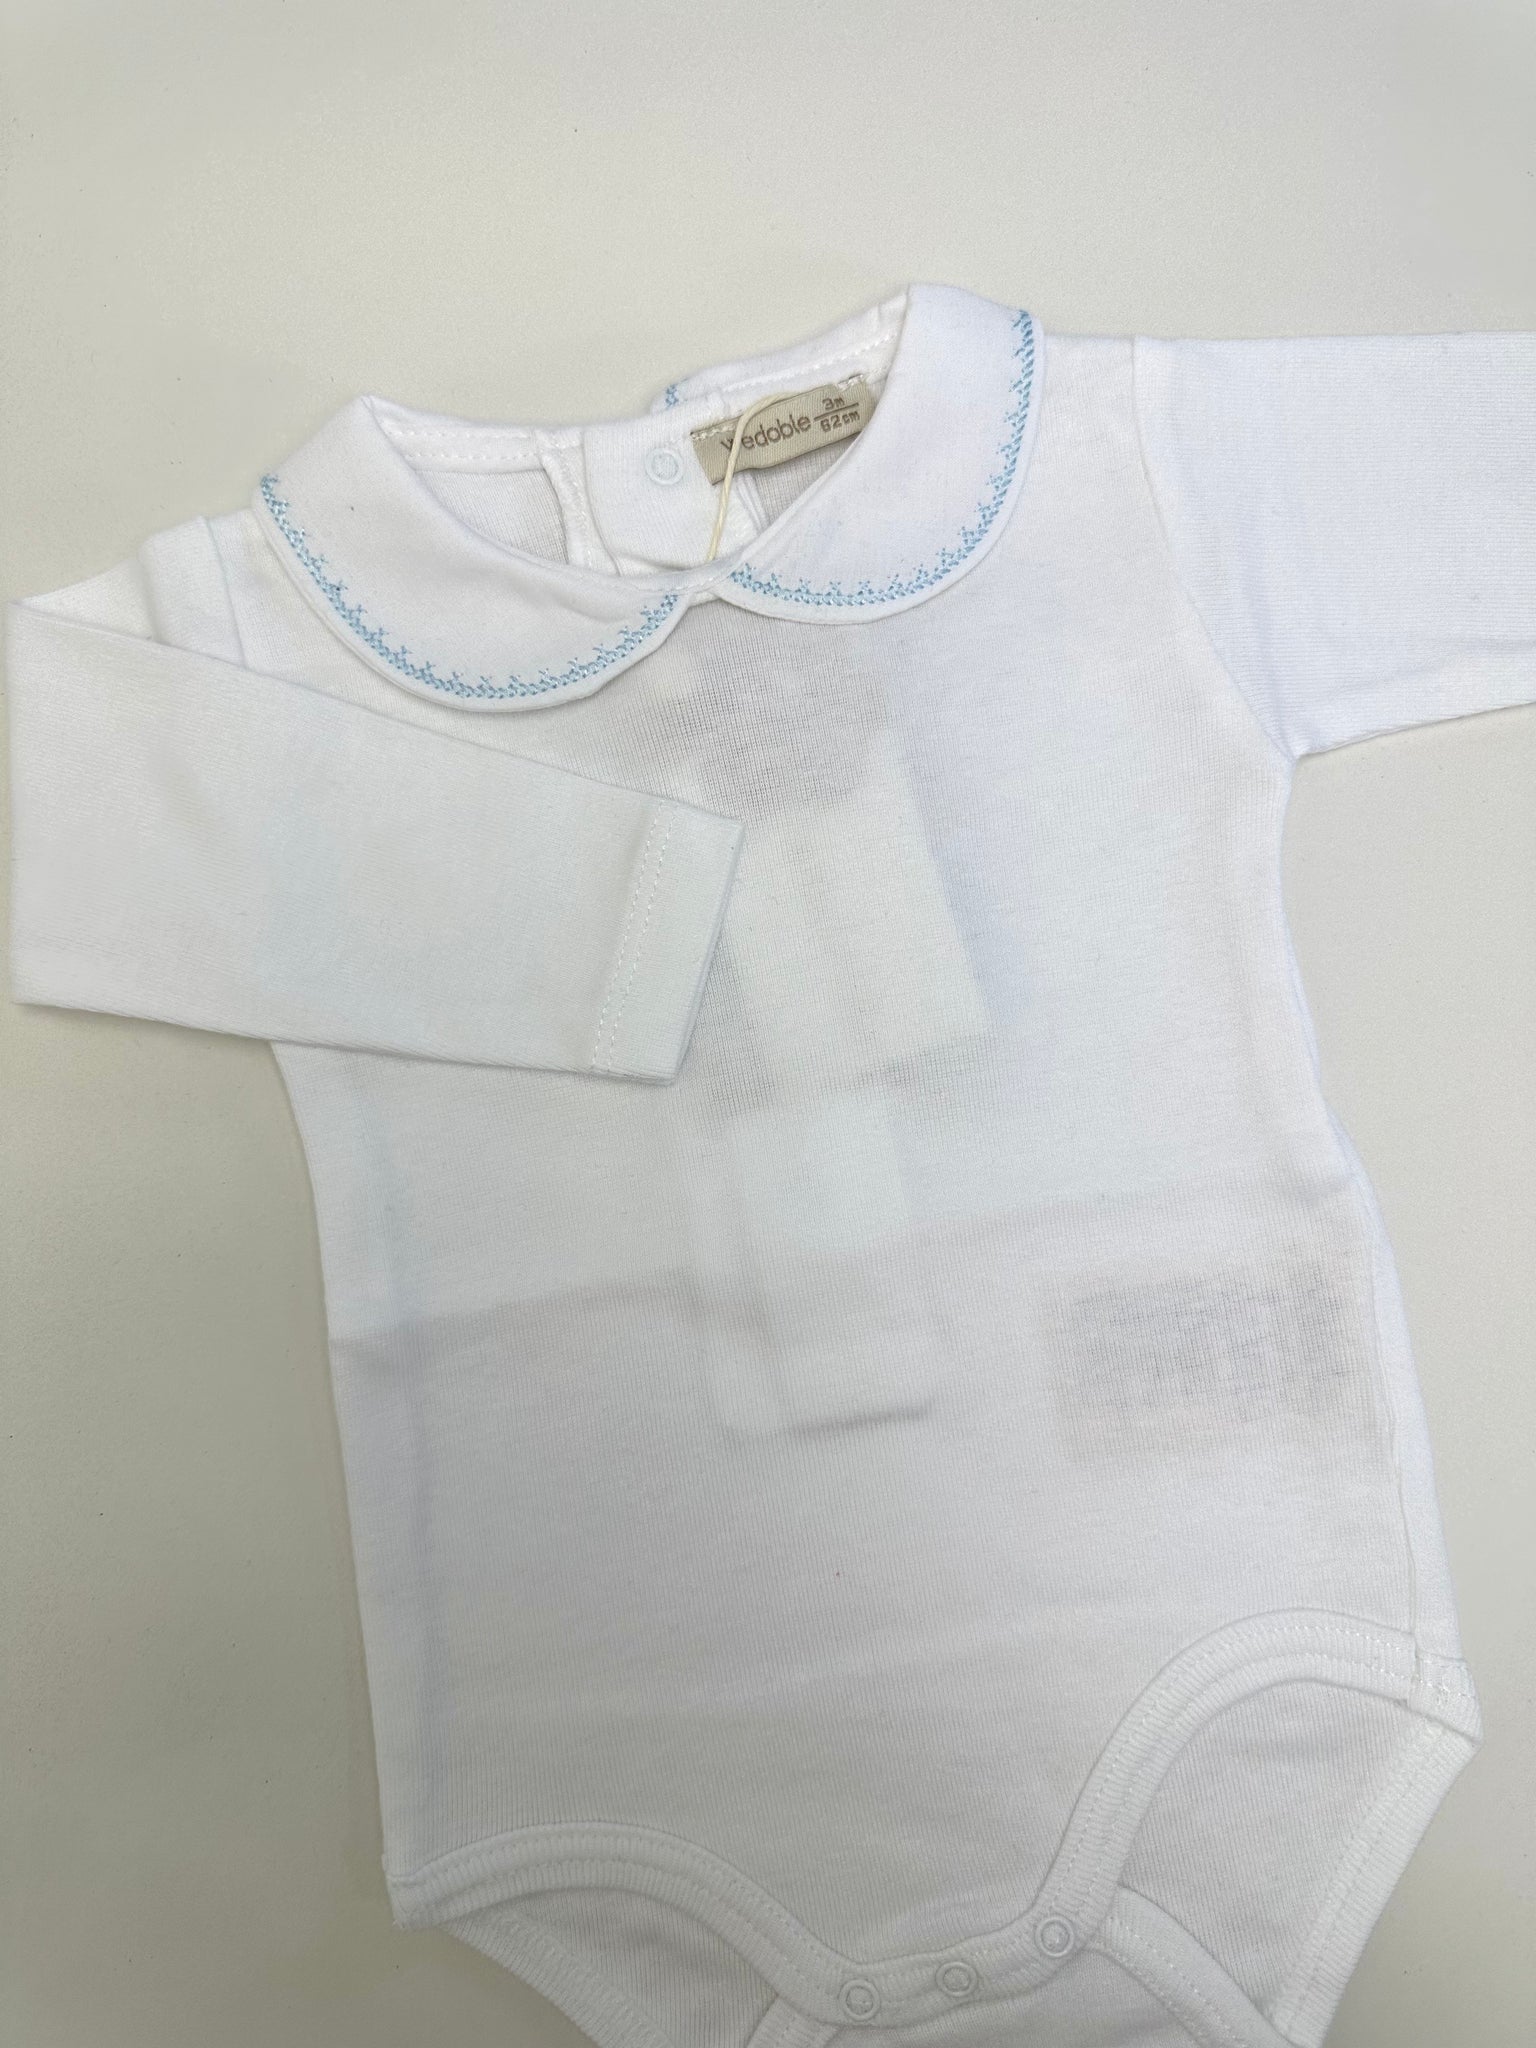 Wedoble White & Baby Blue Cross Stitch Body